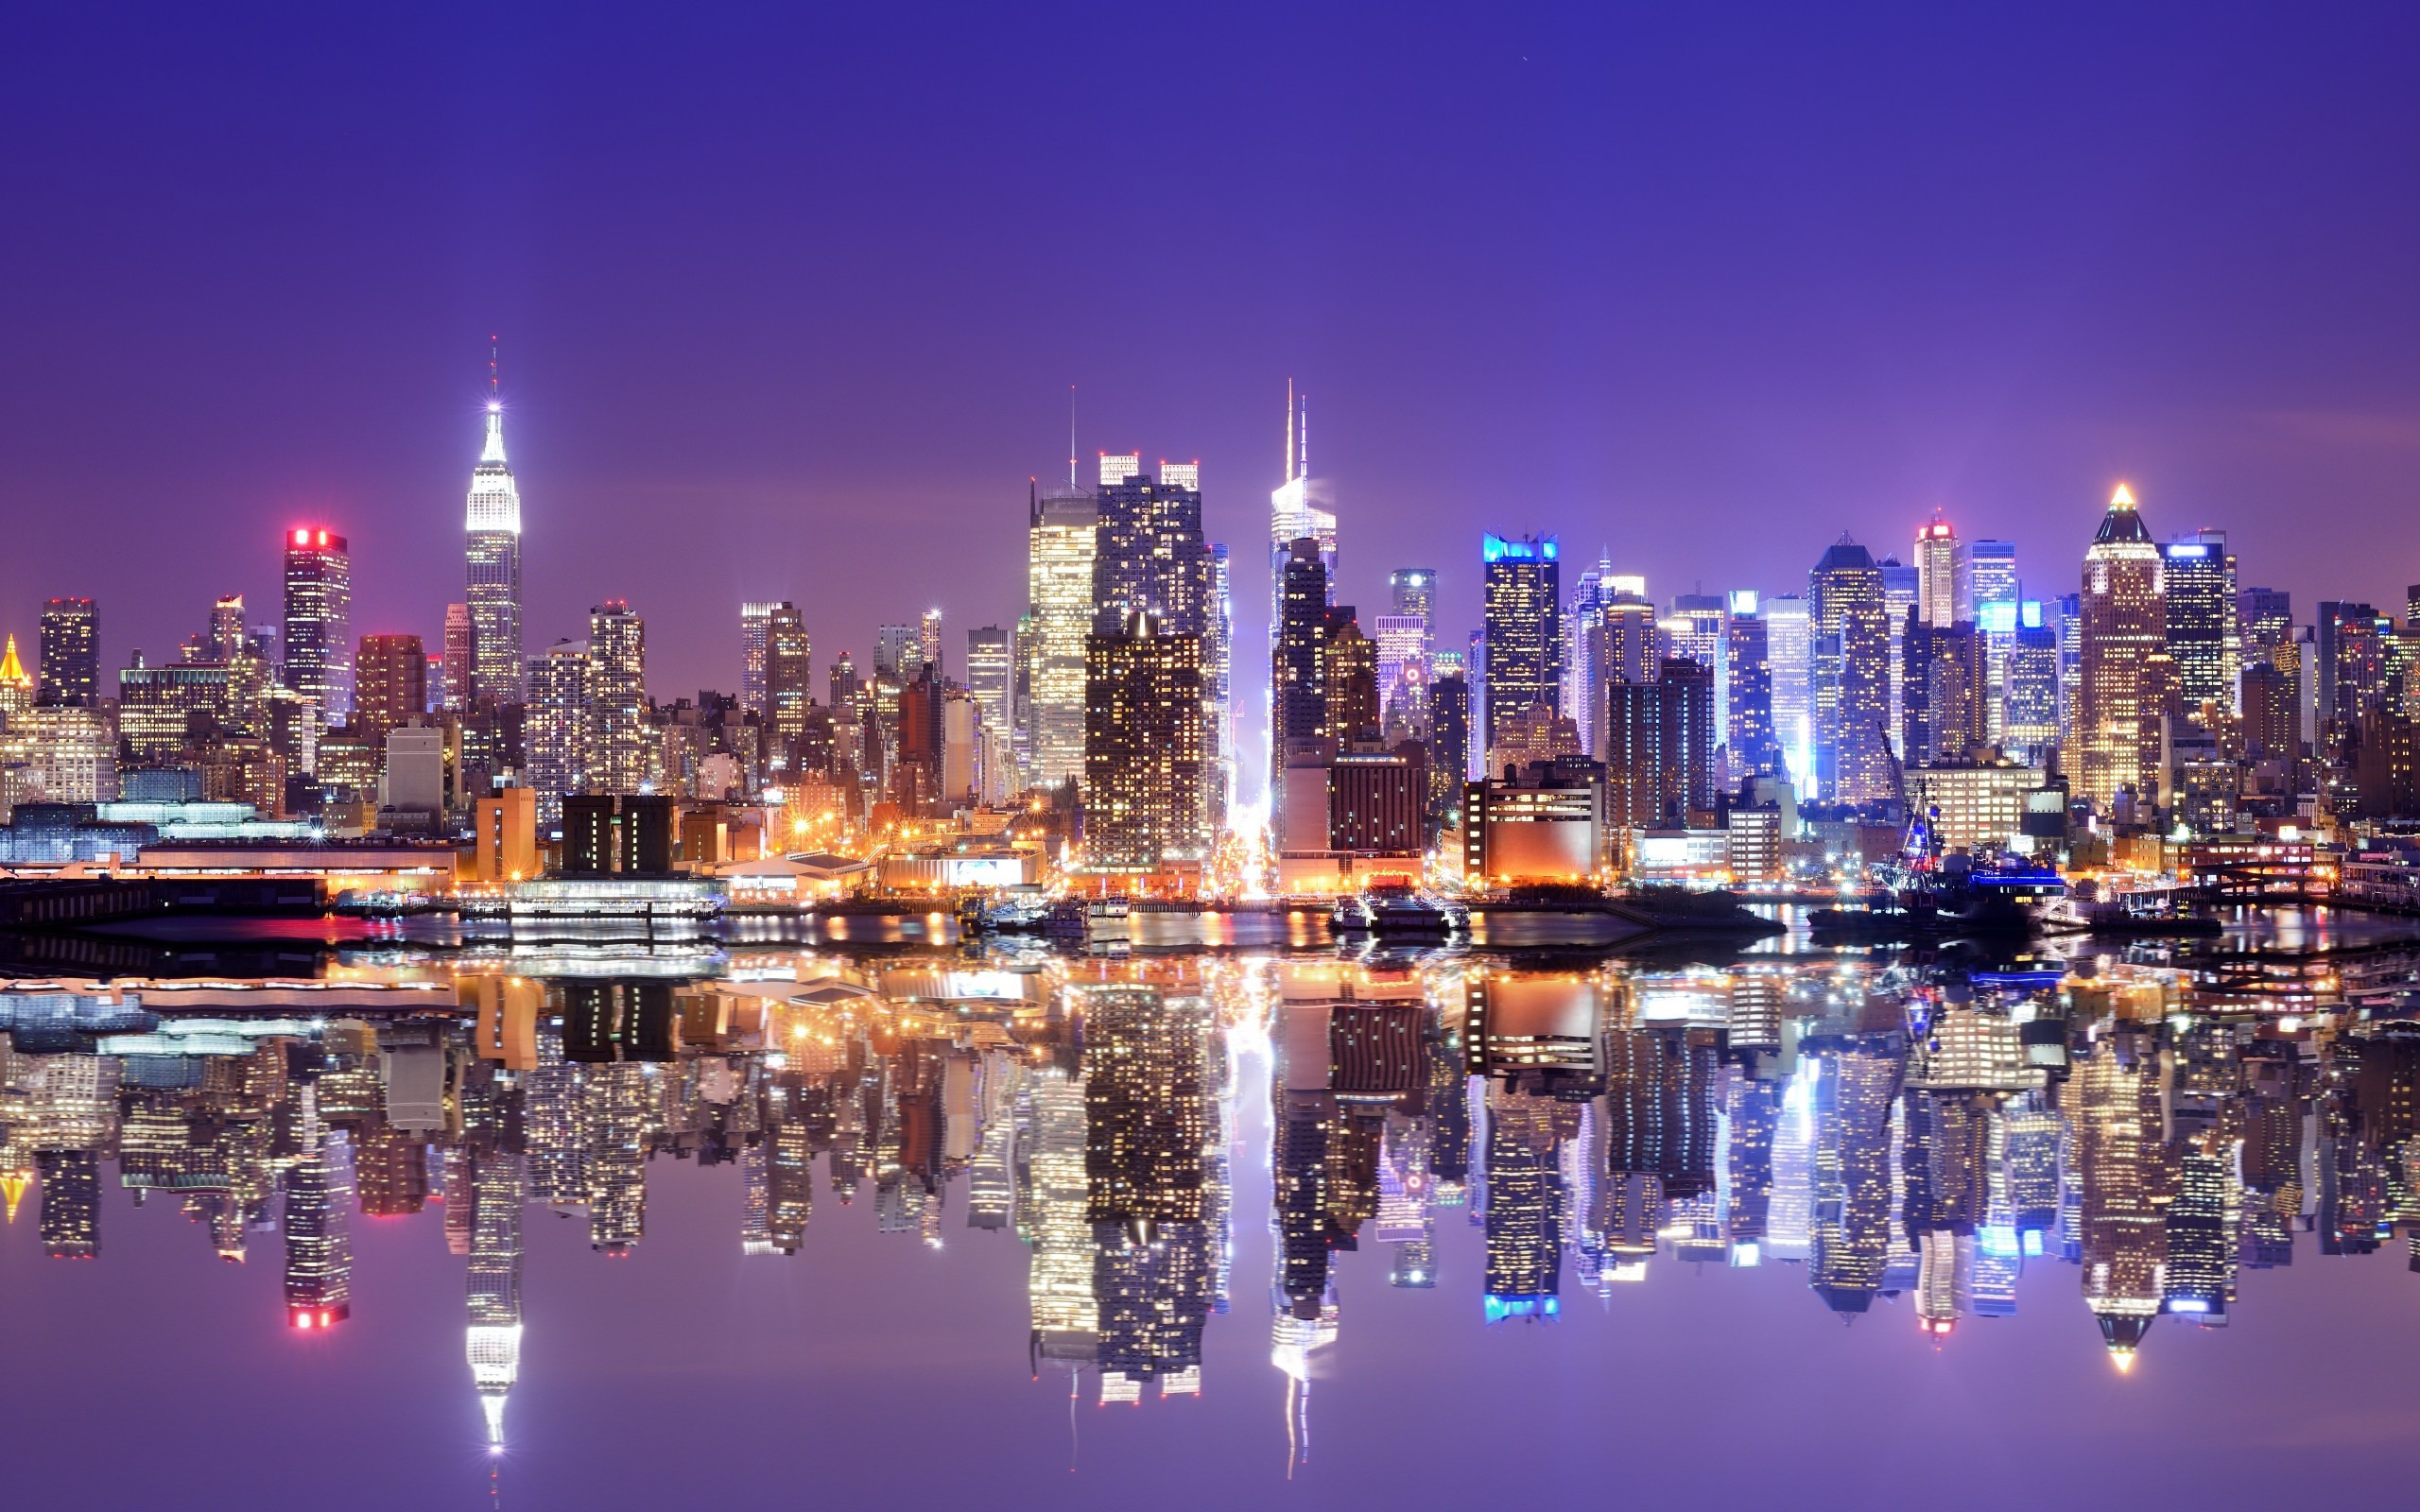 Best ideas about New York City Landscape
. Save or Pin skyscraper New York City City Landscape Wallpapers HD Now.